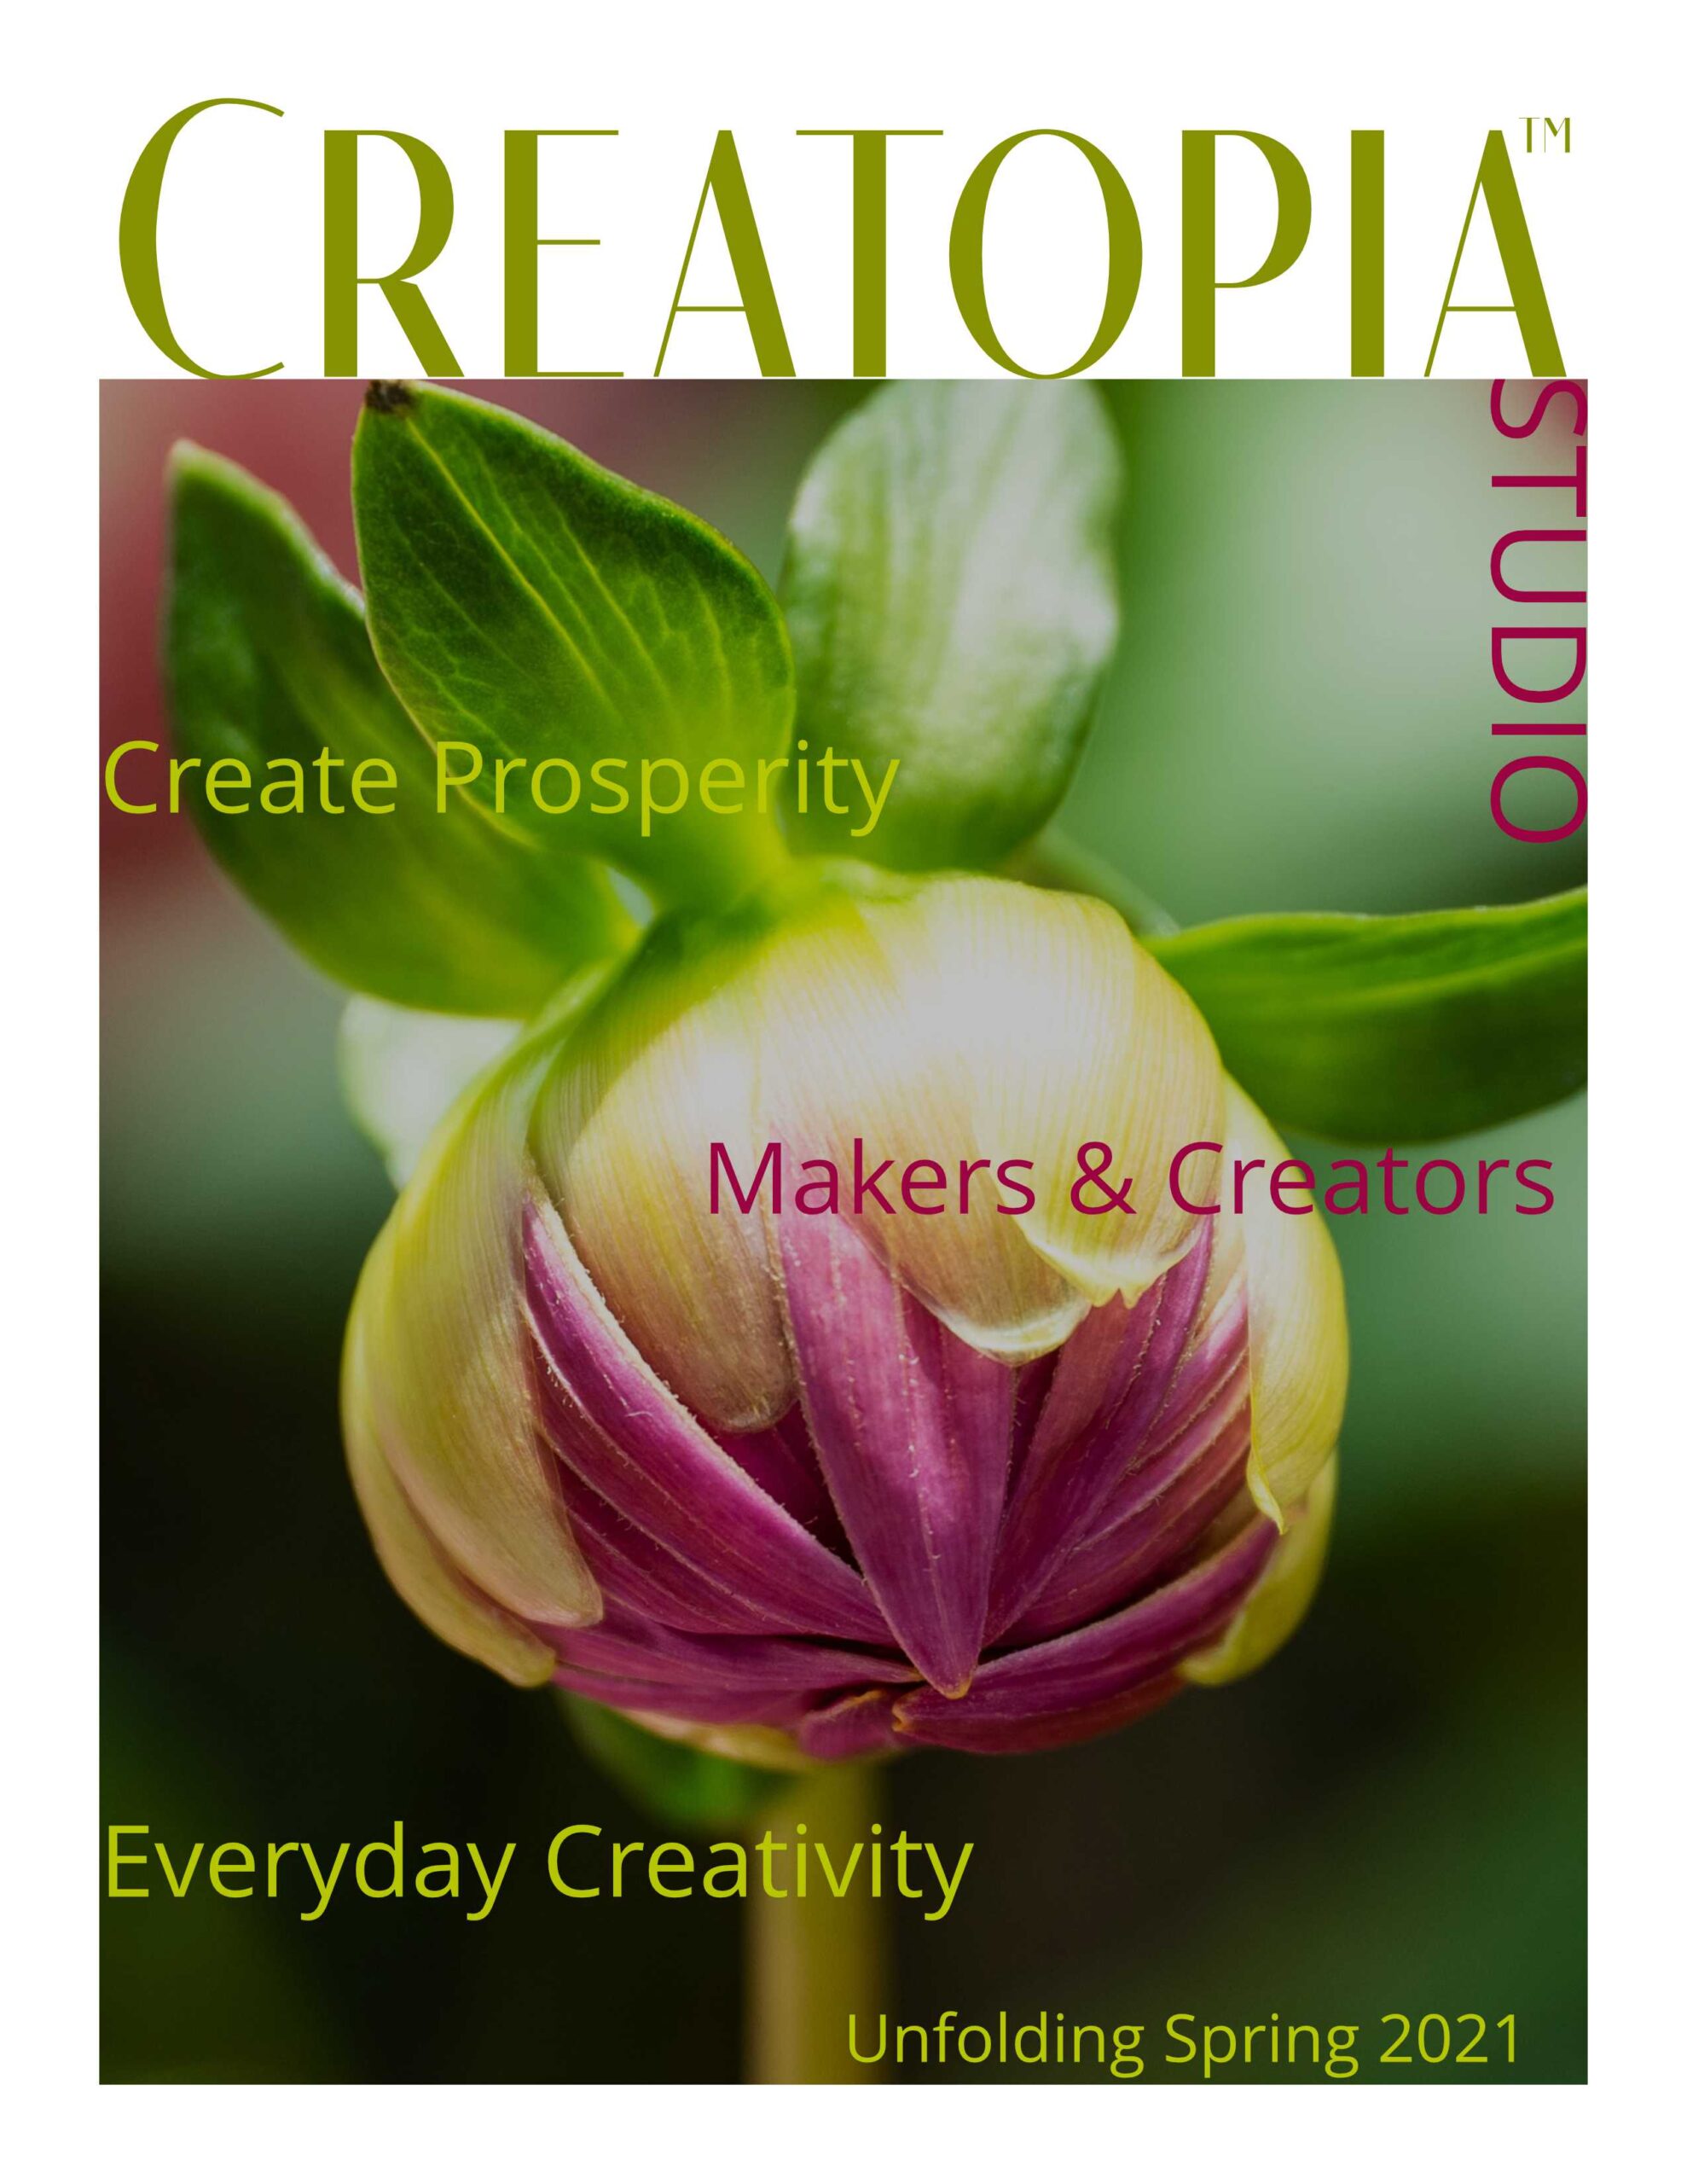 Creatopia Magazine Spring 2021 Unfolding Issue #2